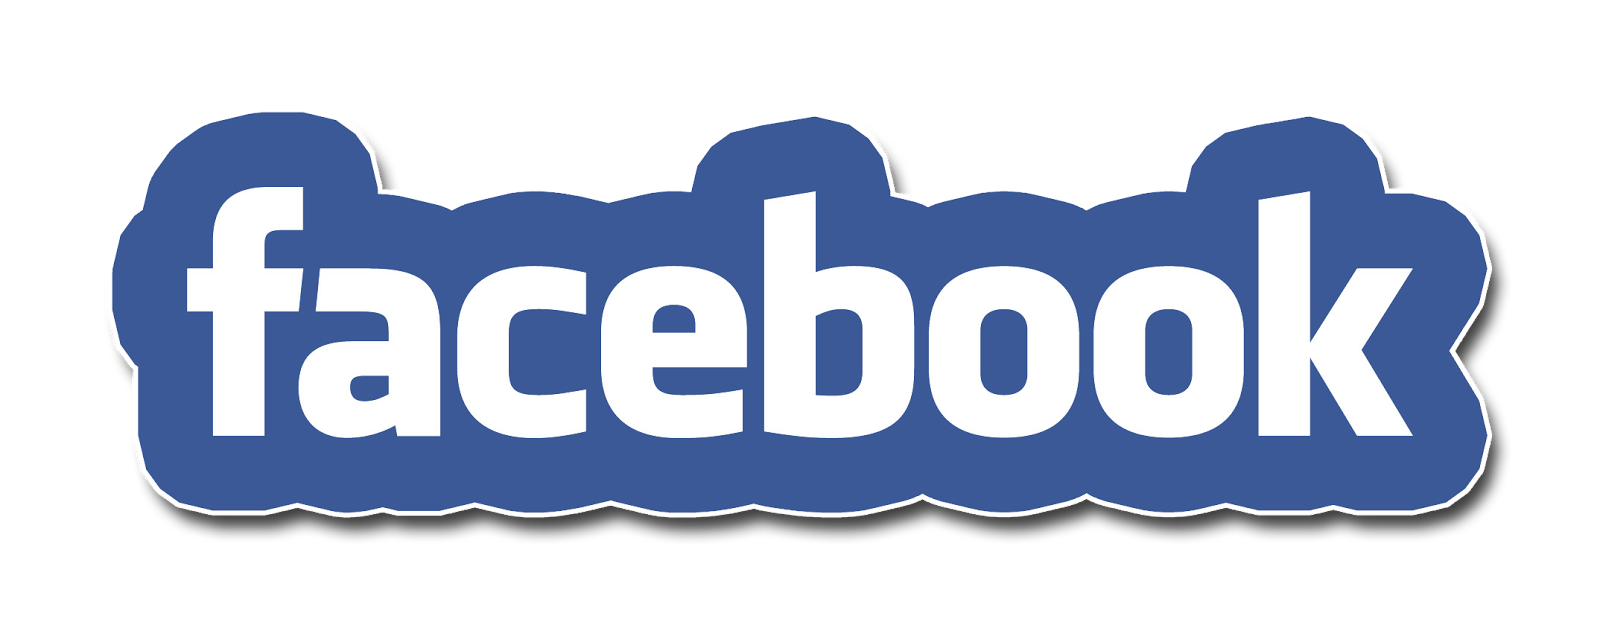 Cara Menganti Nama Facebook Yang Sudah Limit 2015 